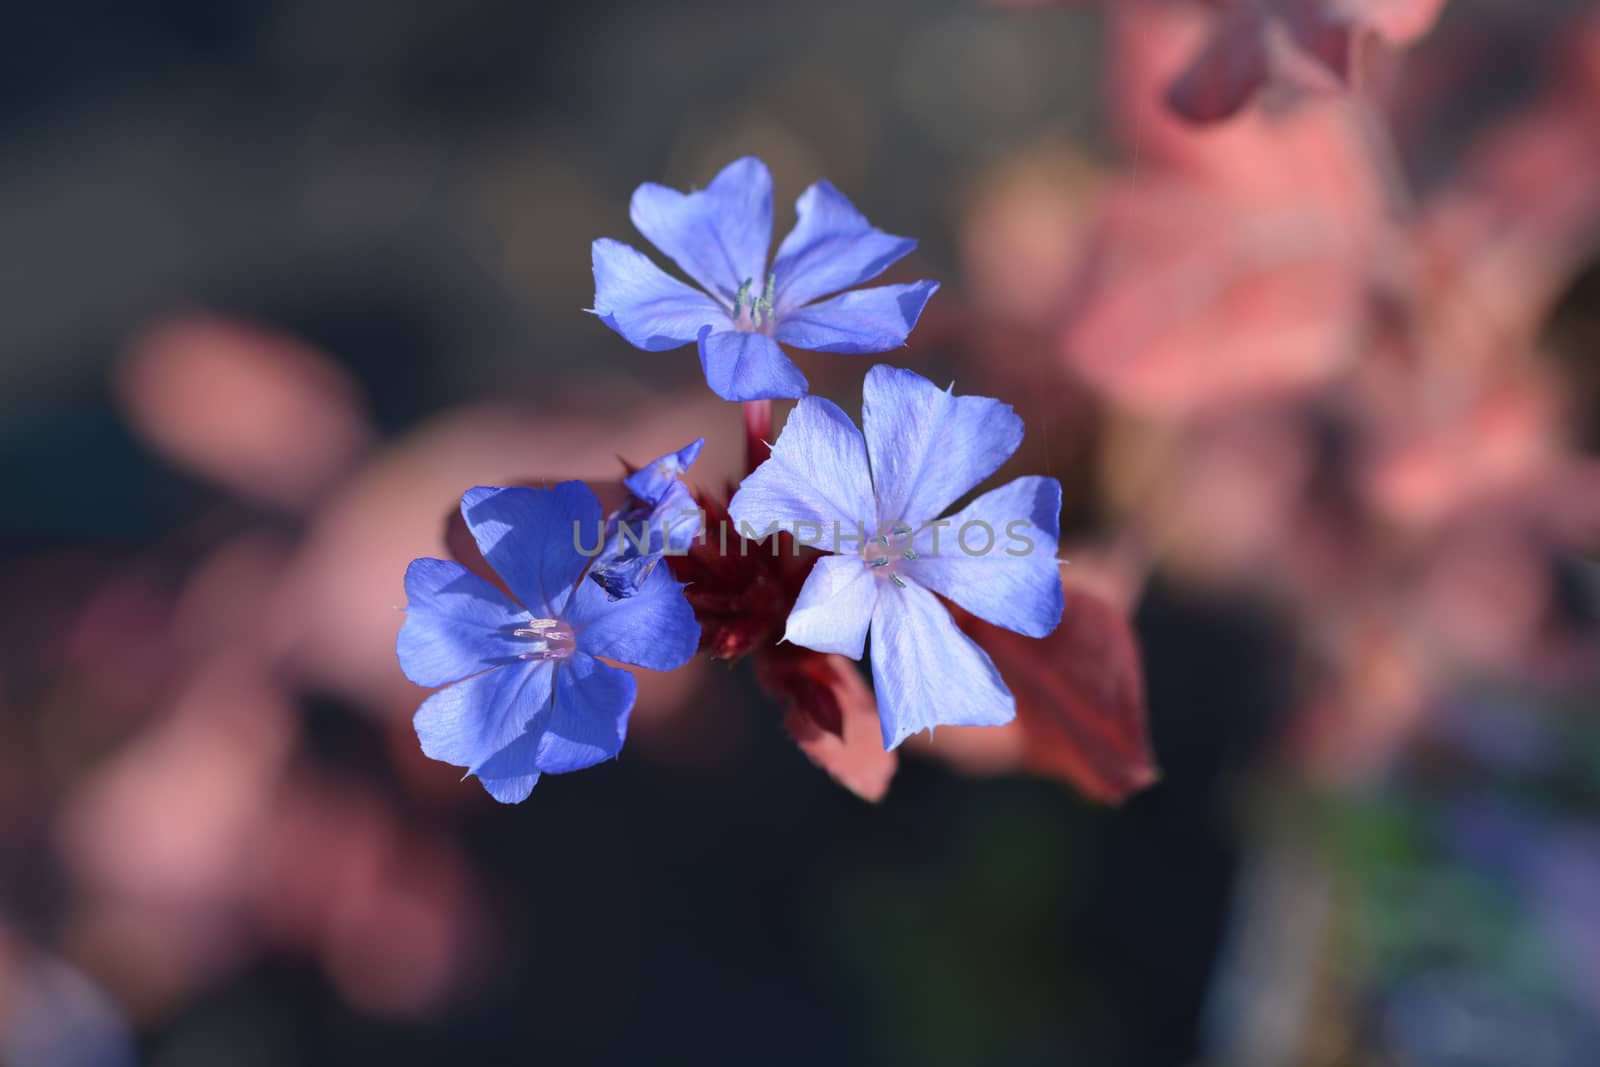 Blue Leadwort flower - Latin name - Ceratostigma plumbaginoides